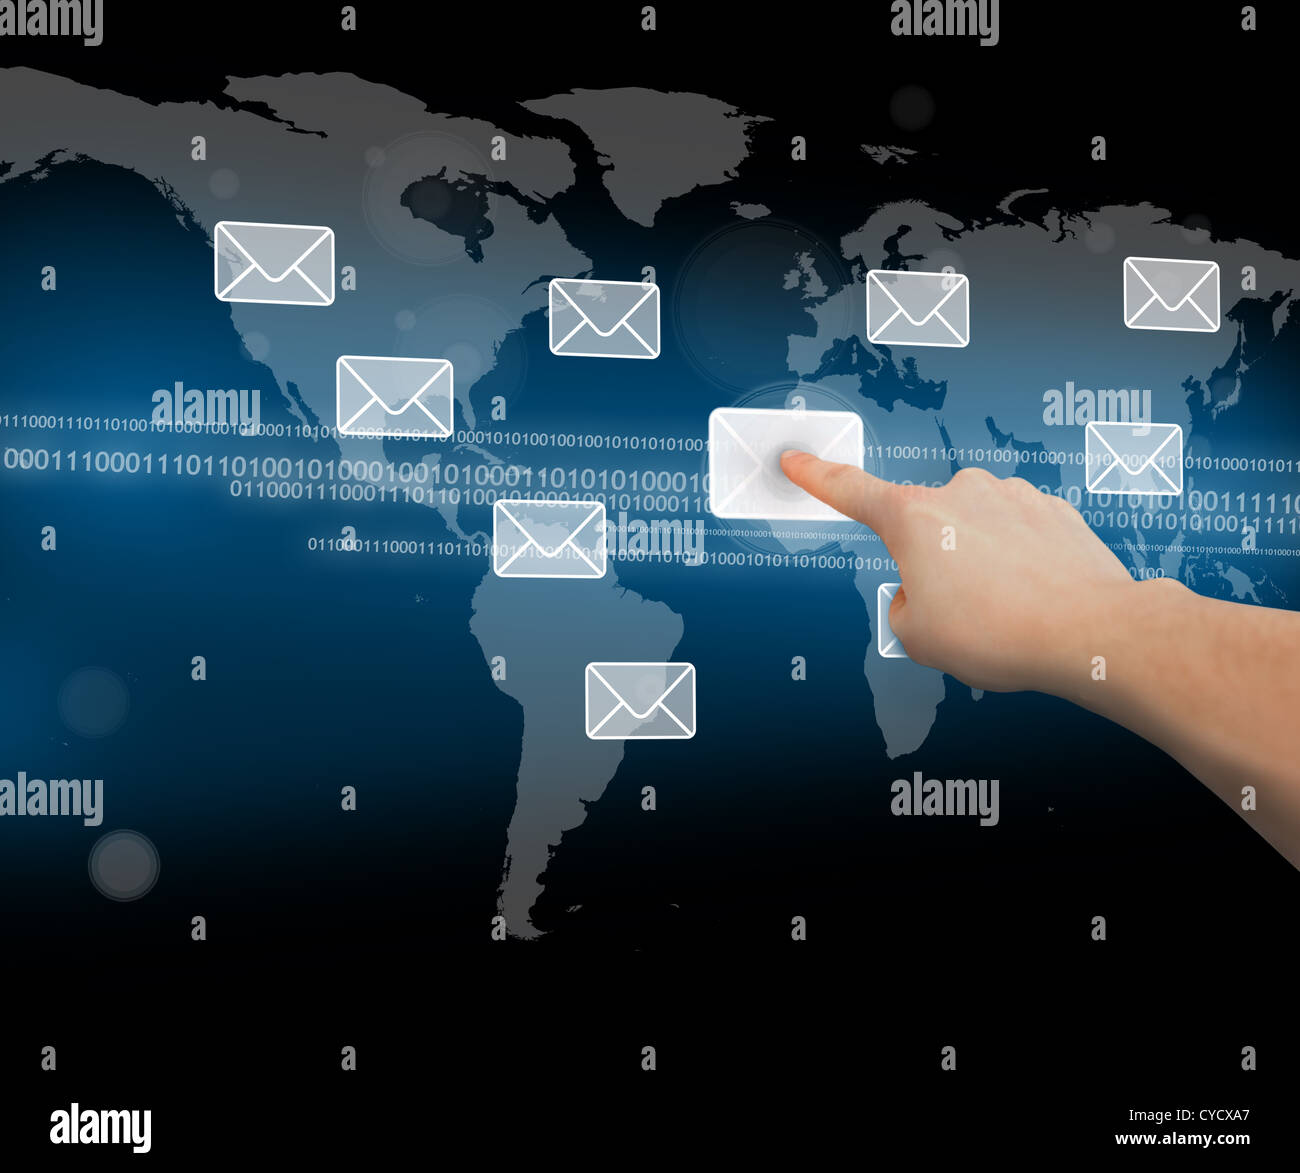 Finger pushing mail symbol on world map interface Stock Photo